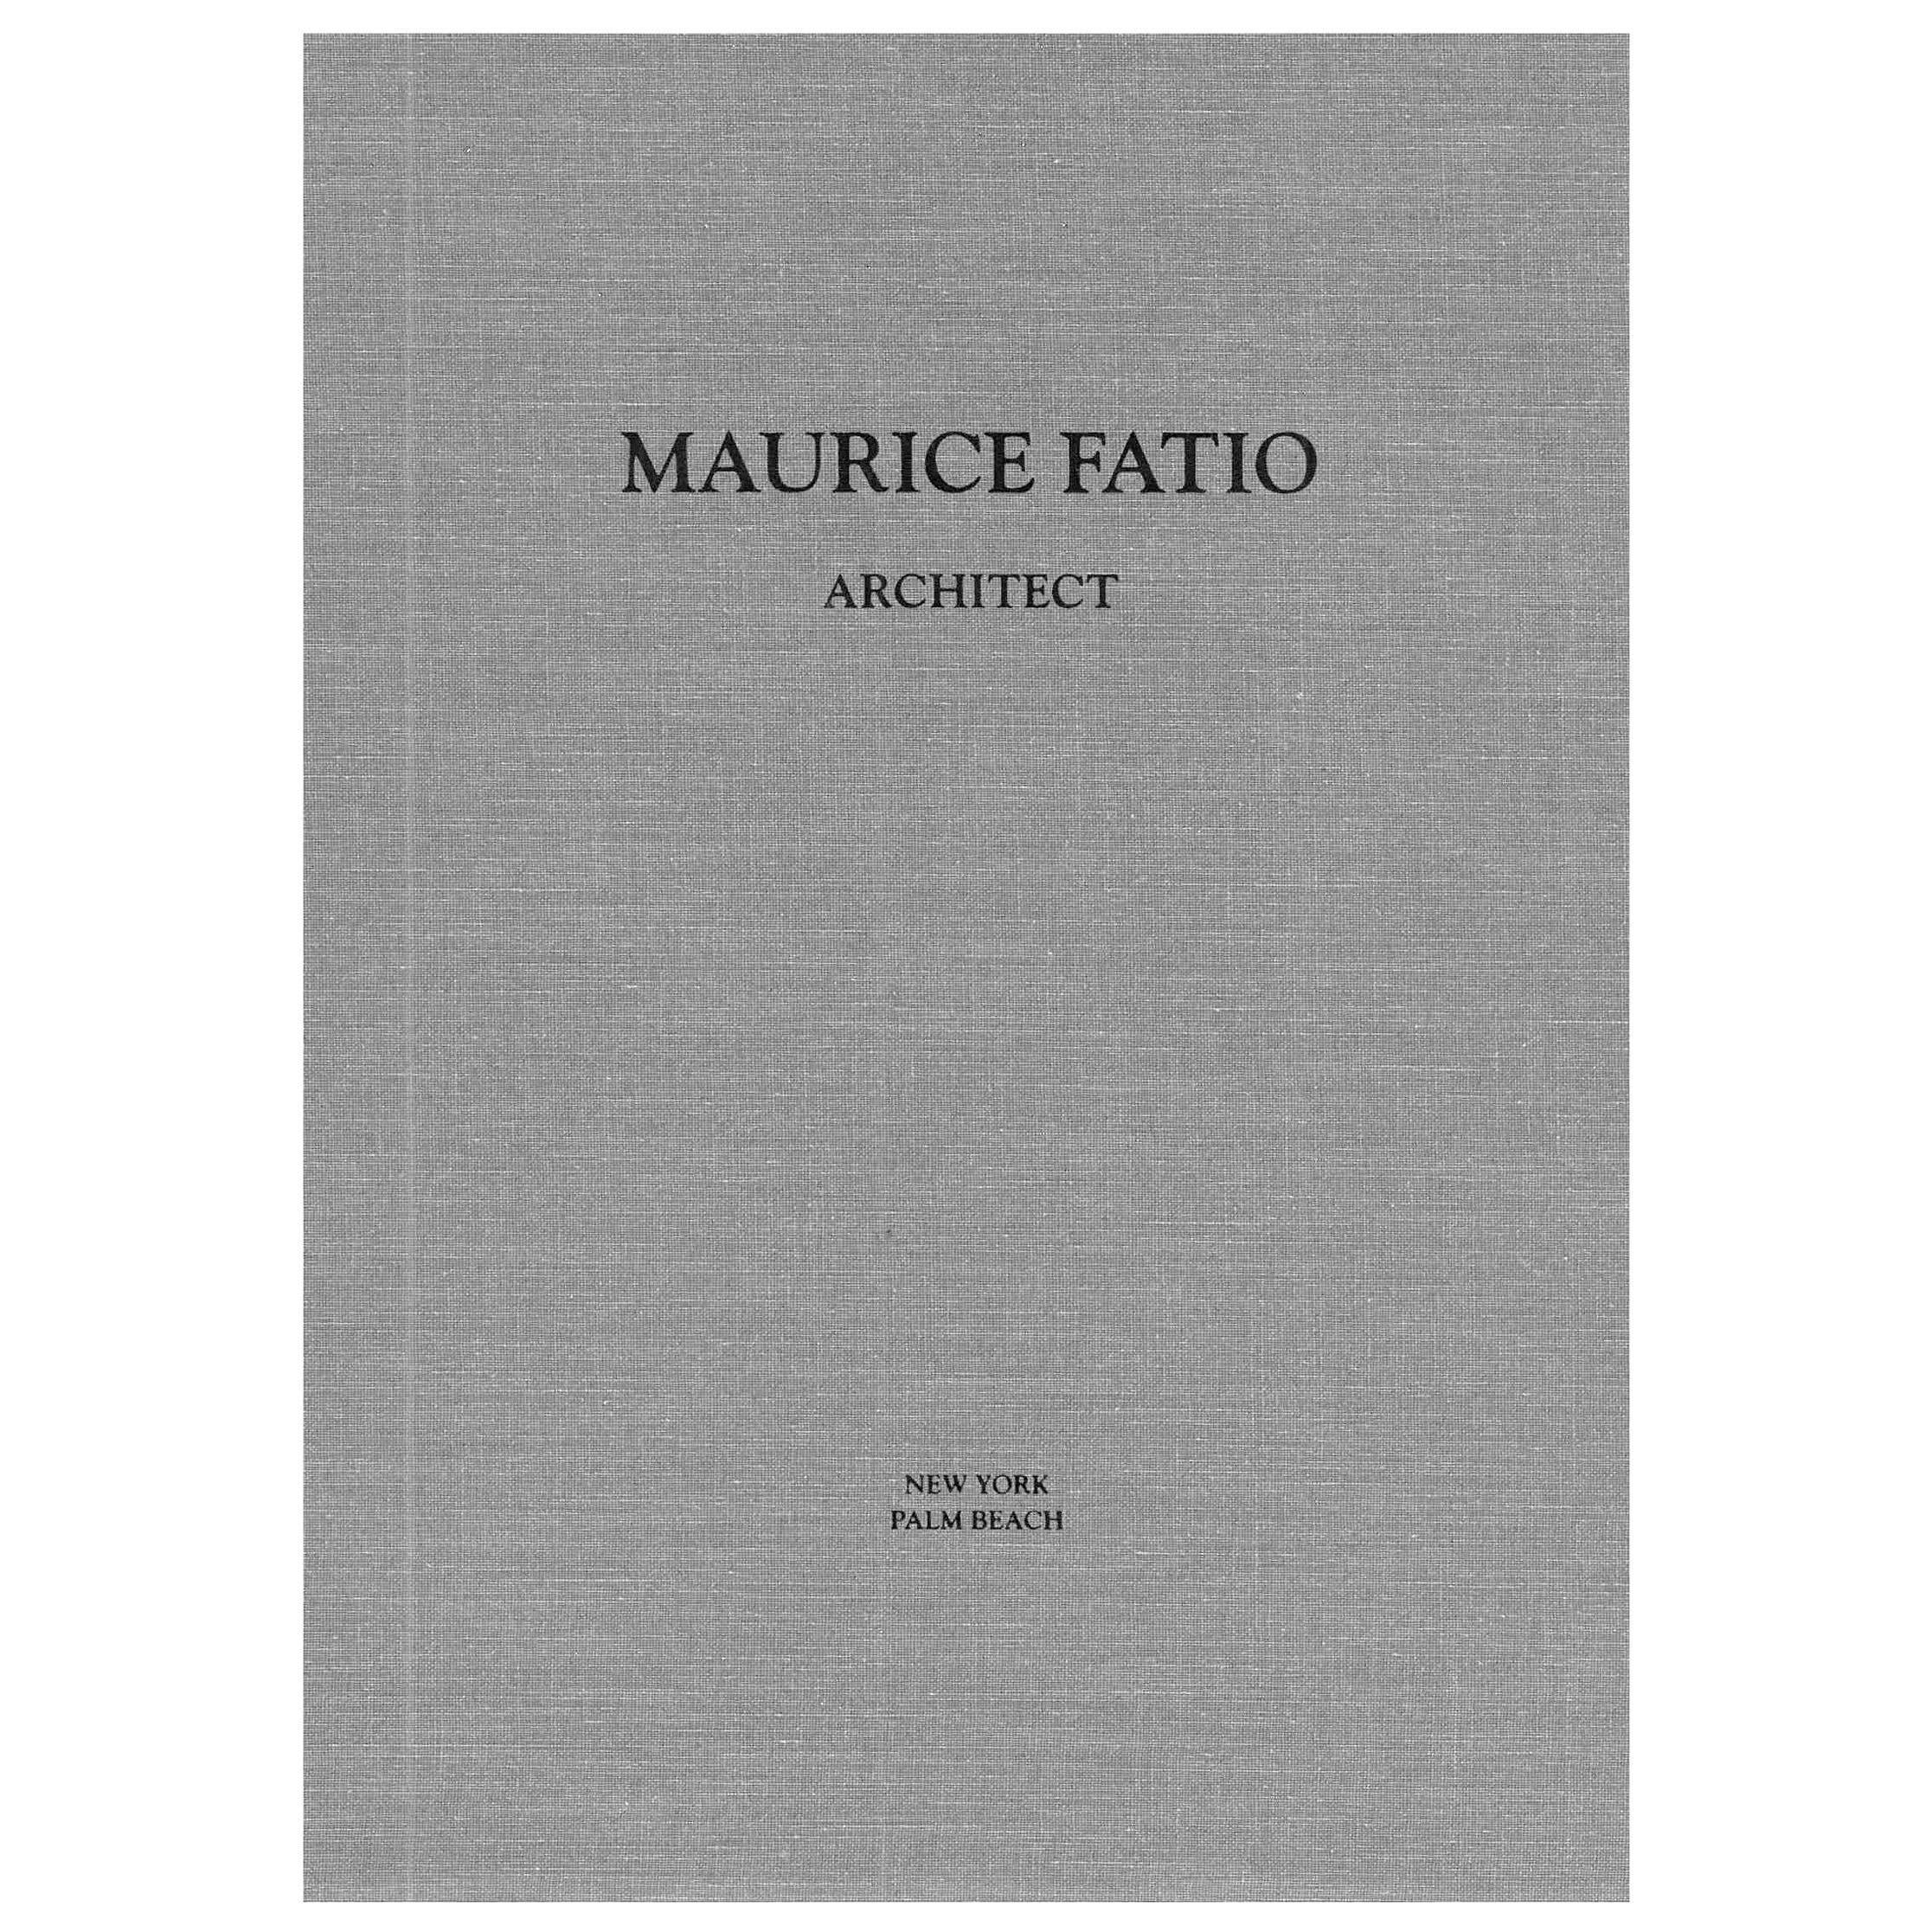 "Maurice Fatio - Architect, New York, Palm Beach" Book